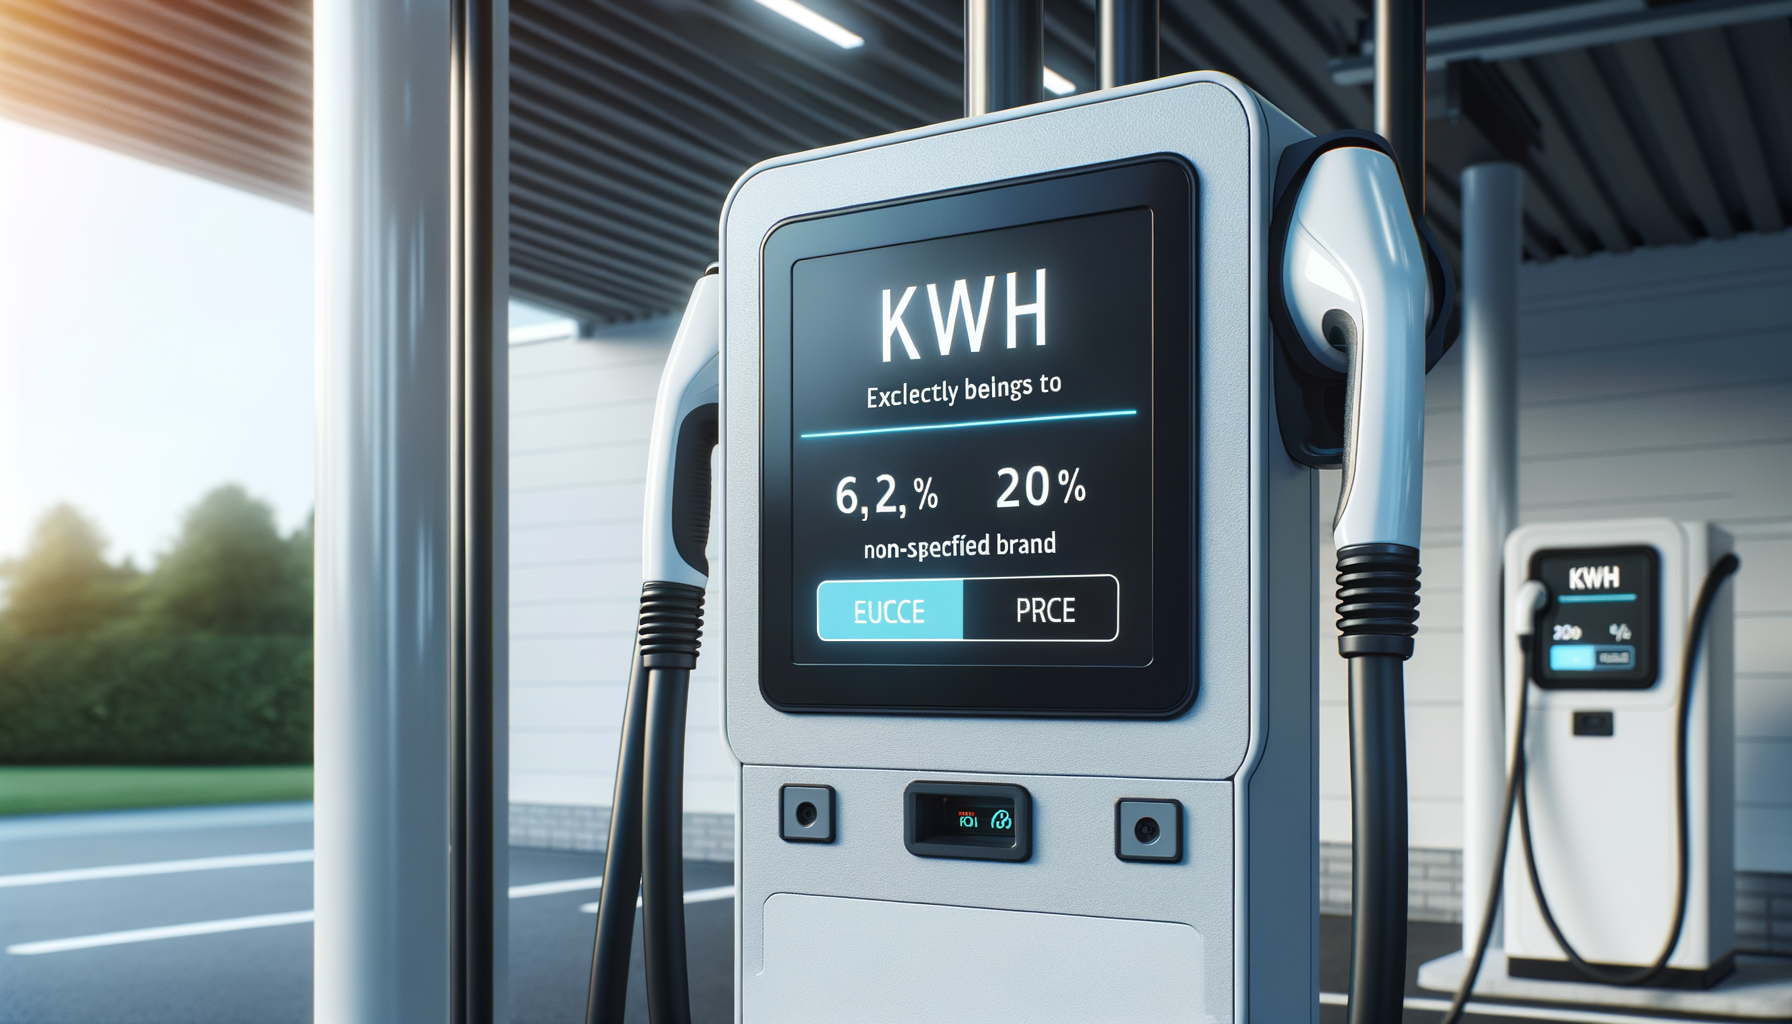 ALT: Tesla Supercharging cost display